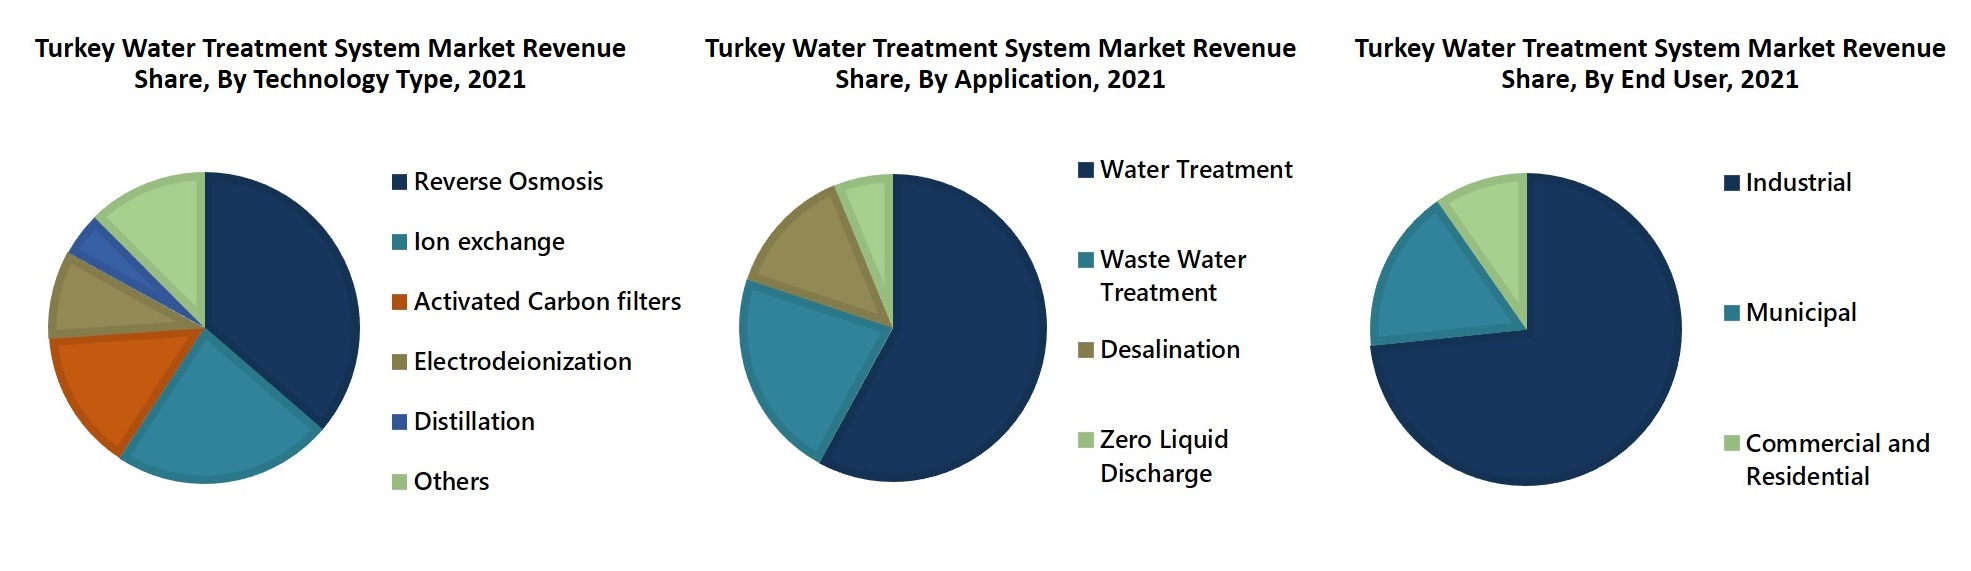 Turkey Water Treatment System Market Revenue Share